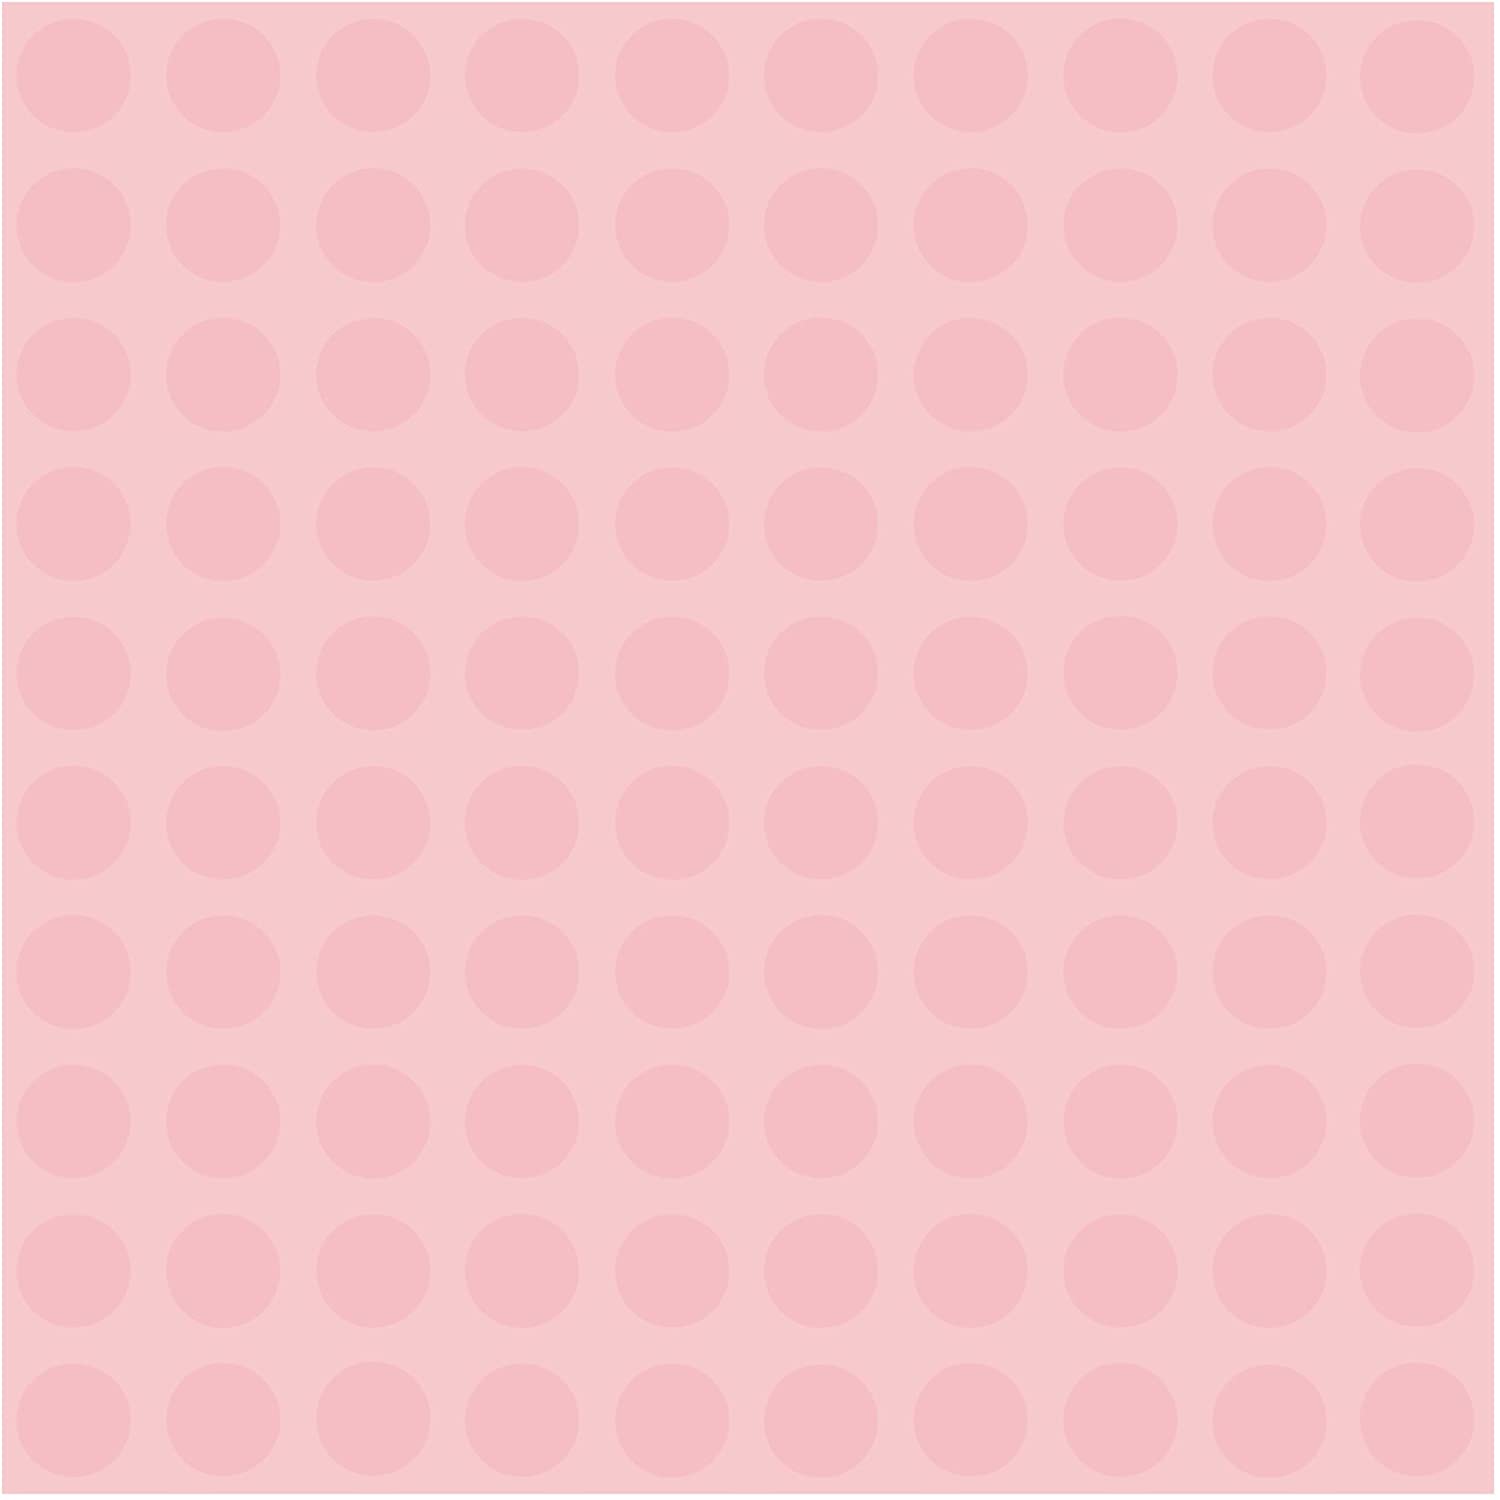 York Wallcoverings Girl Power 2 Dots 8 X 10 Wallpaper Memo Sample Light Pink Background Pinks